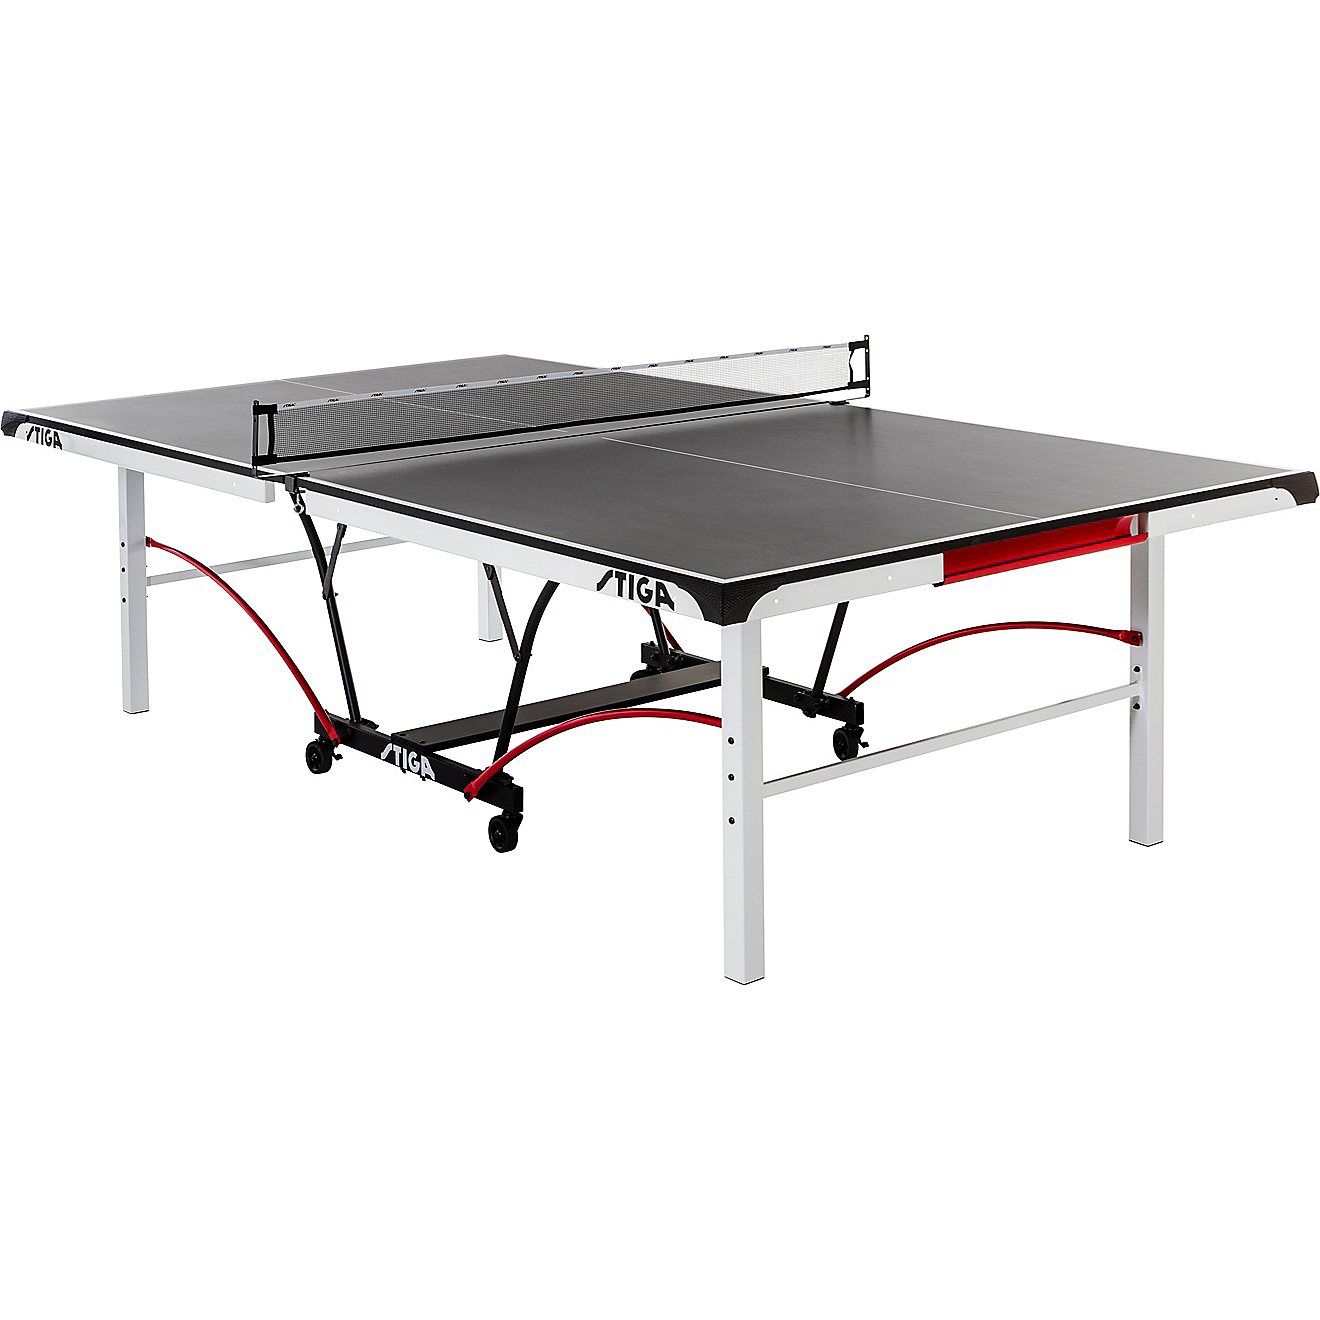 STIGA 3100 Premier Table Tennis Table | Academy | Academy Sports + Outdoors